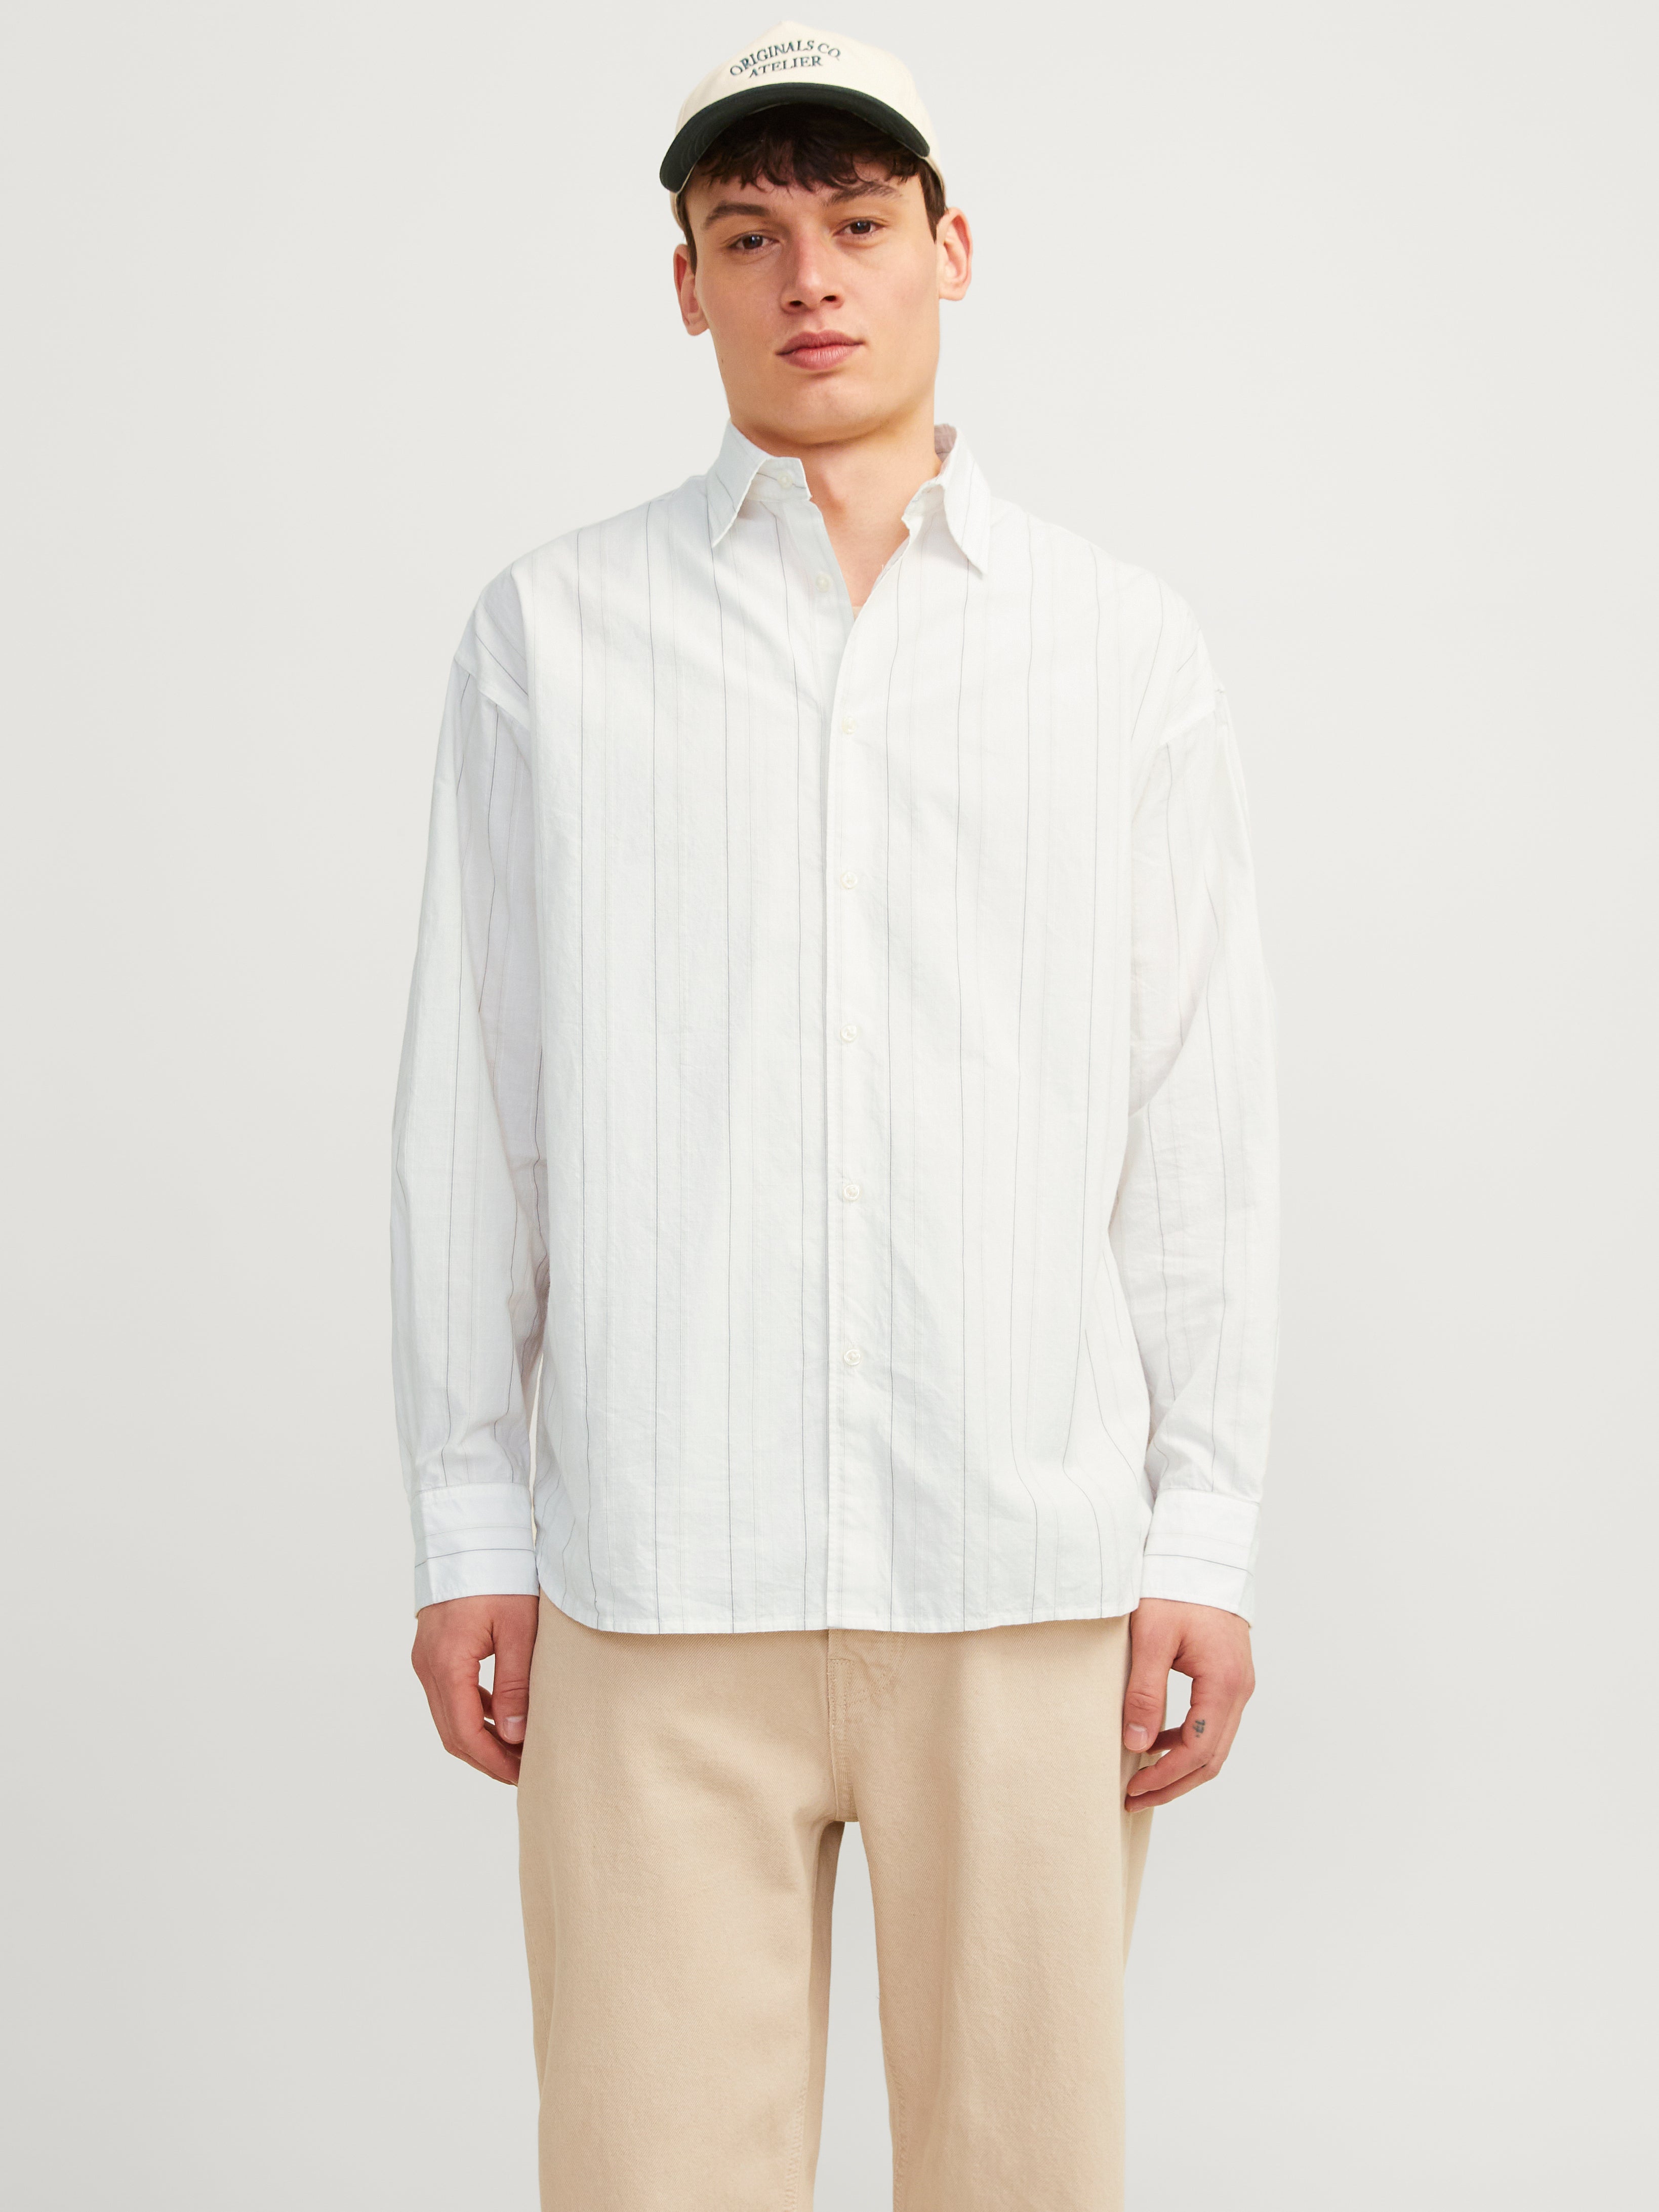 Oversize Fit Shirt | Jack & Jones®